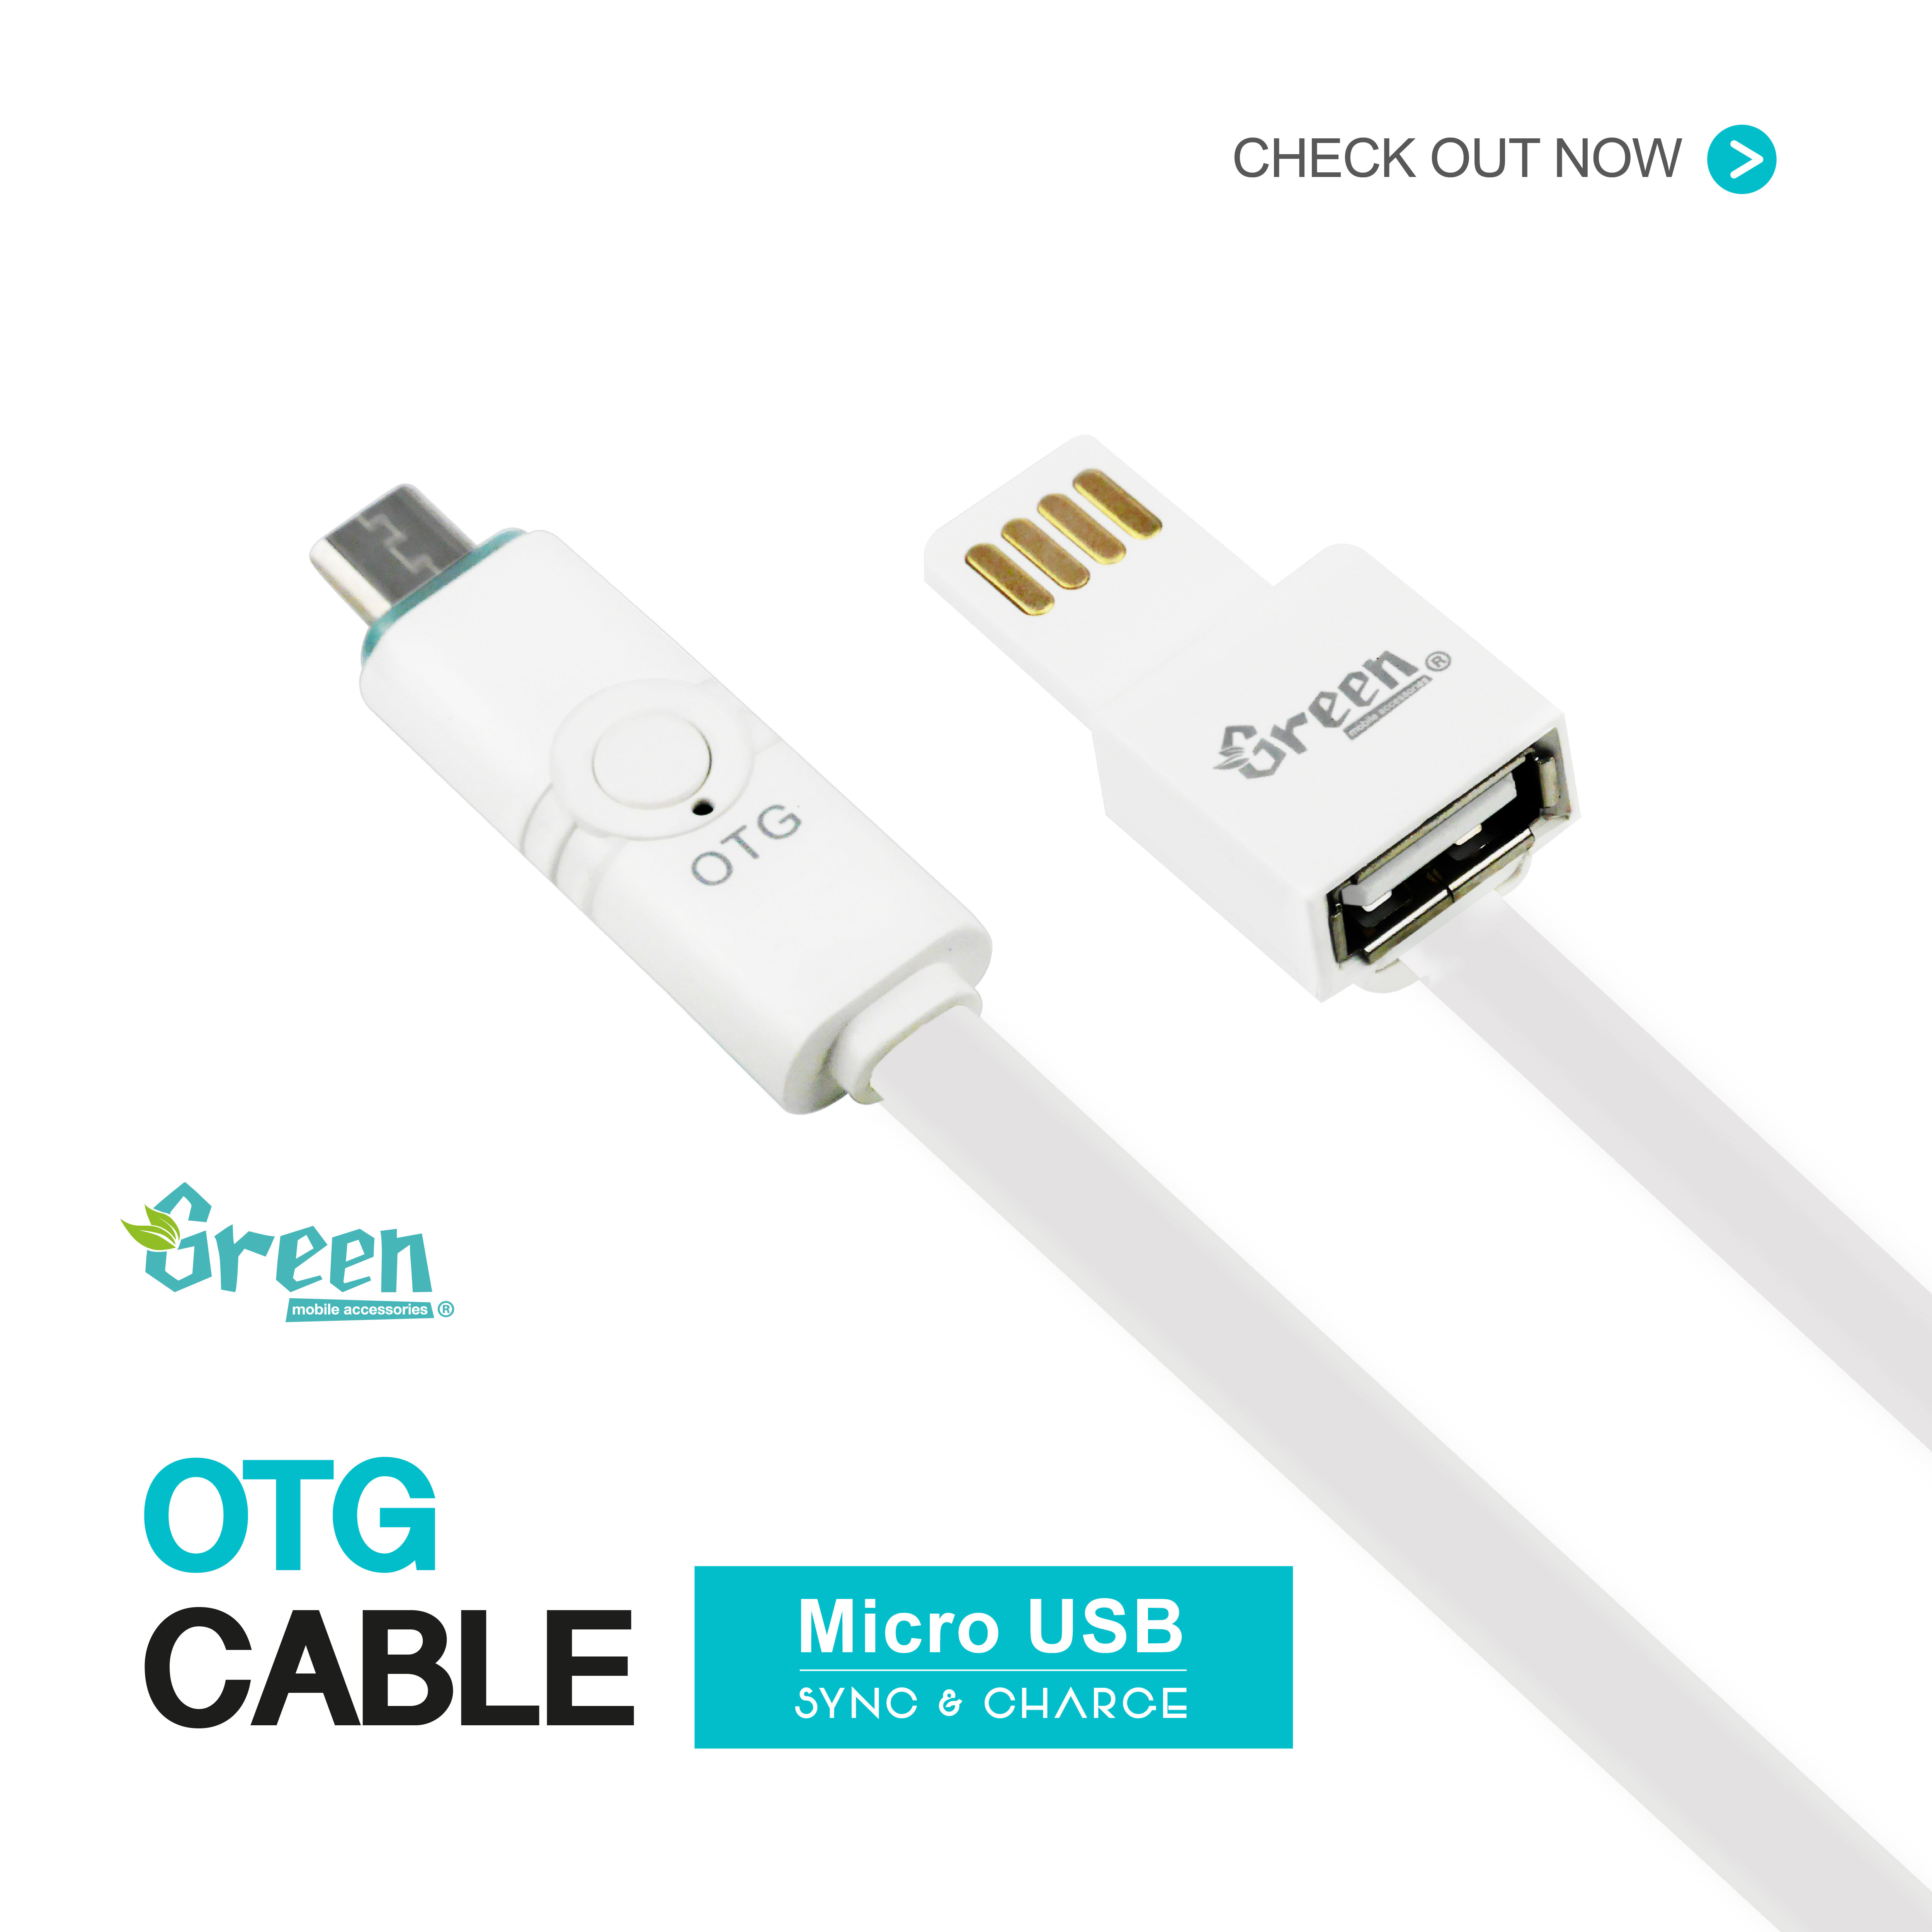 Flat Cord Micro USB 2.0 OTG Cable | Rapid Charge & Sync Data GR-USB-OTG